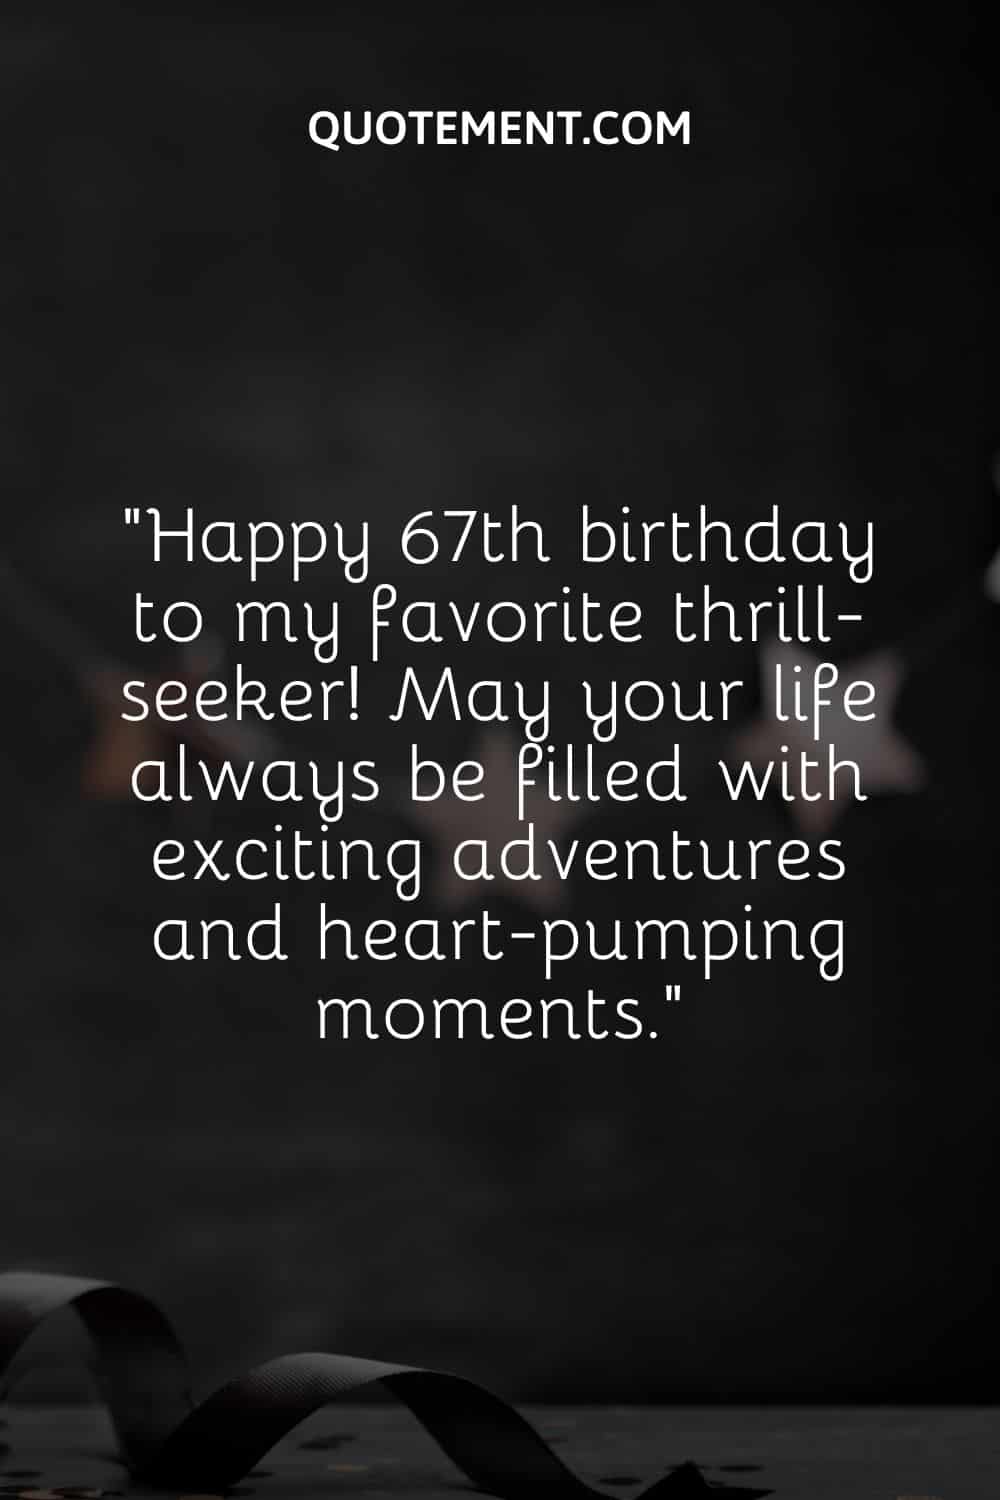 a curly black ribbon on a dark background representing a heartfelt way to wish a happy 67th birthday